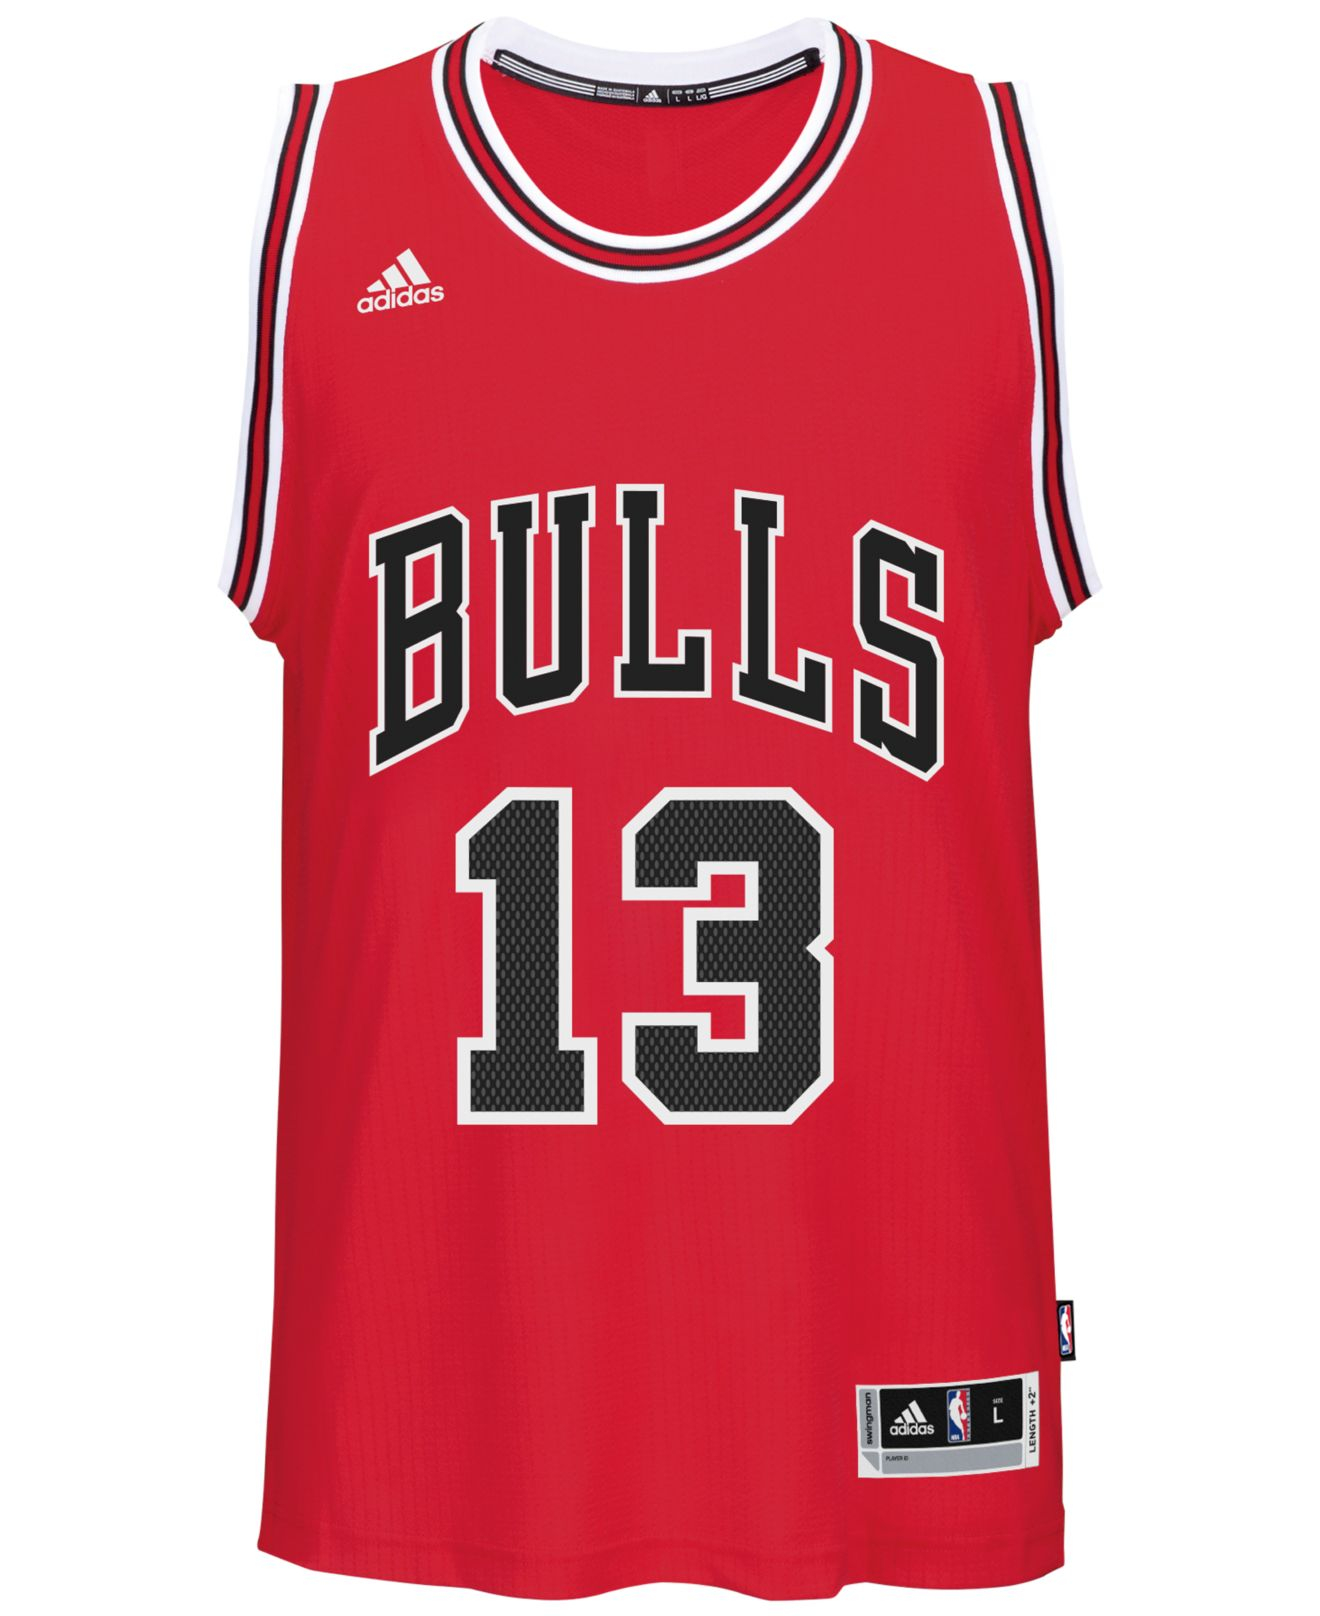 Lyst - Adidas Originals Men's Joakim Noah Chicago Bulls Swingman Jersey ...